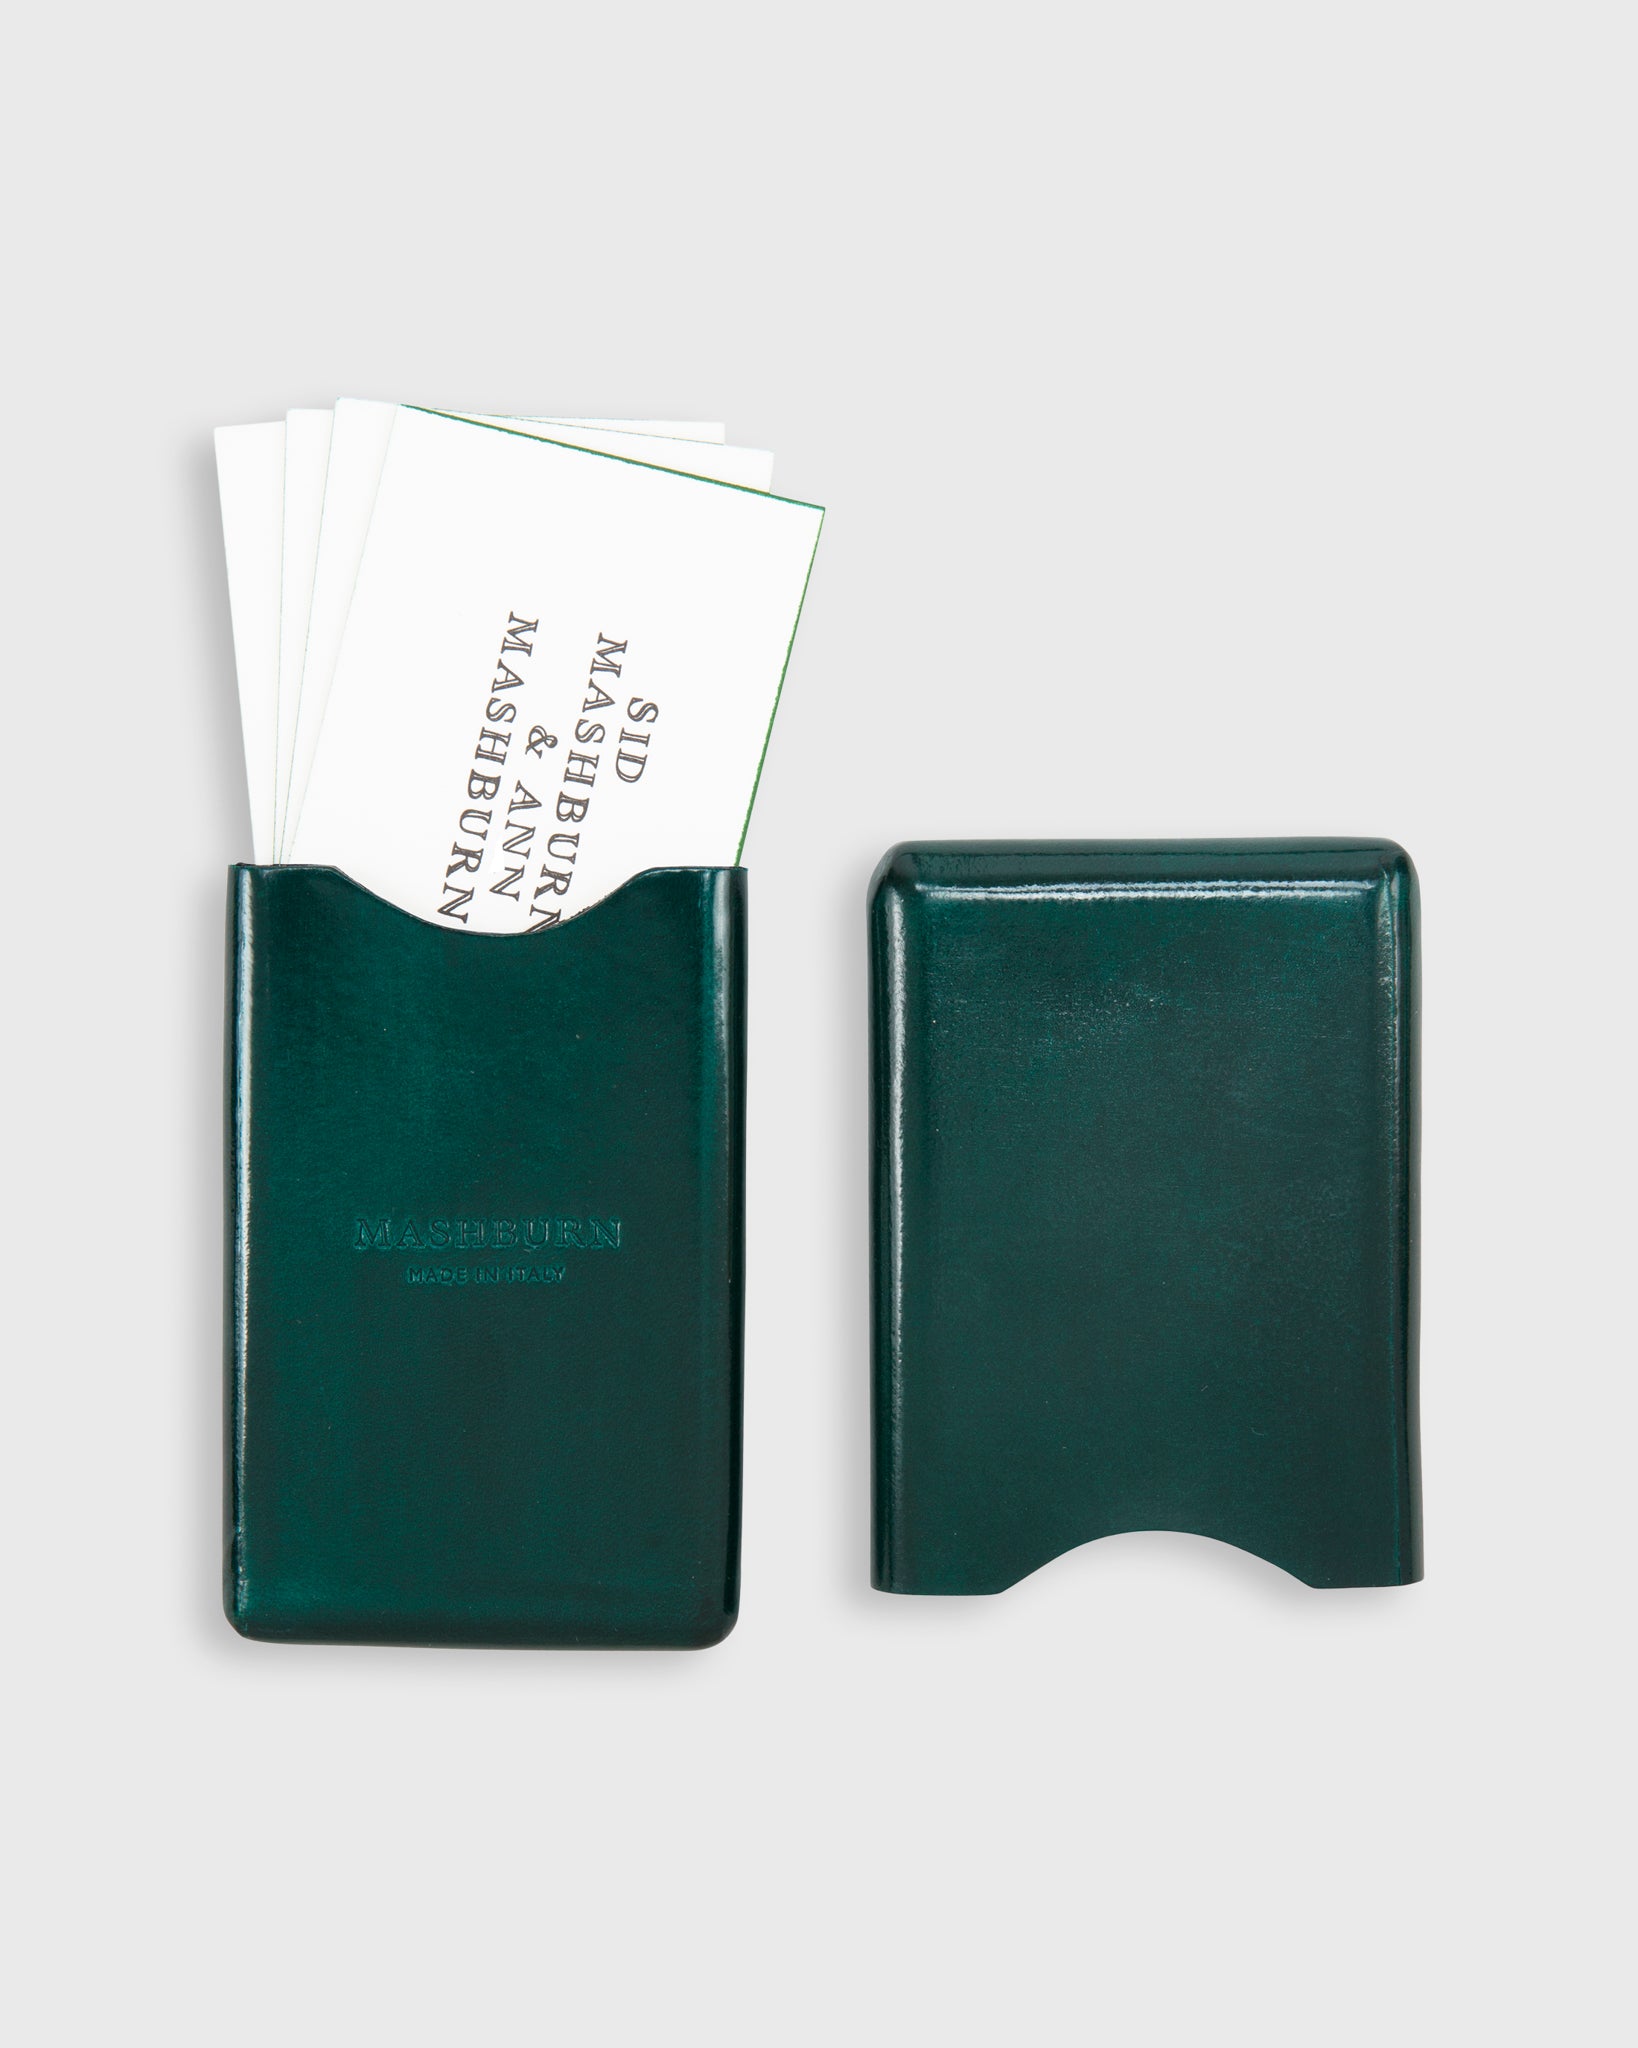 Card Case in Dark Green Leather